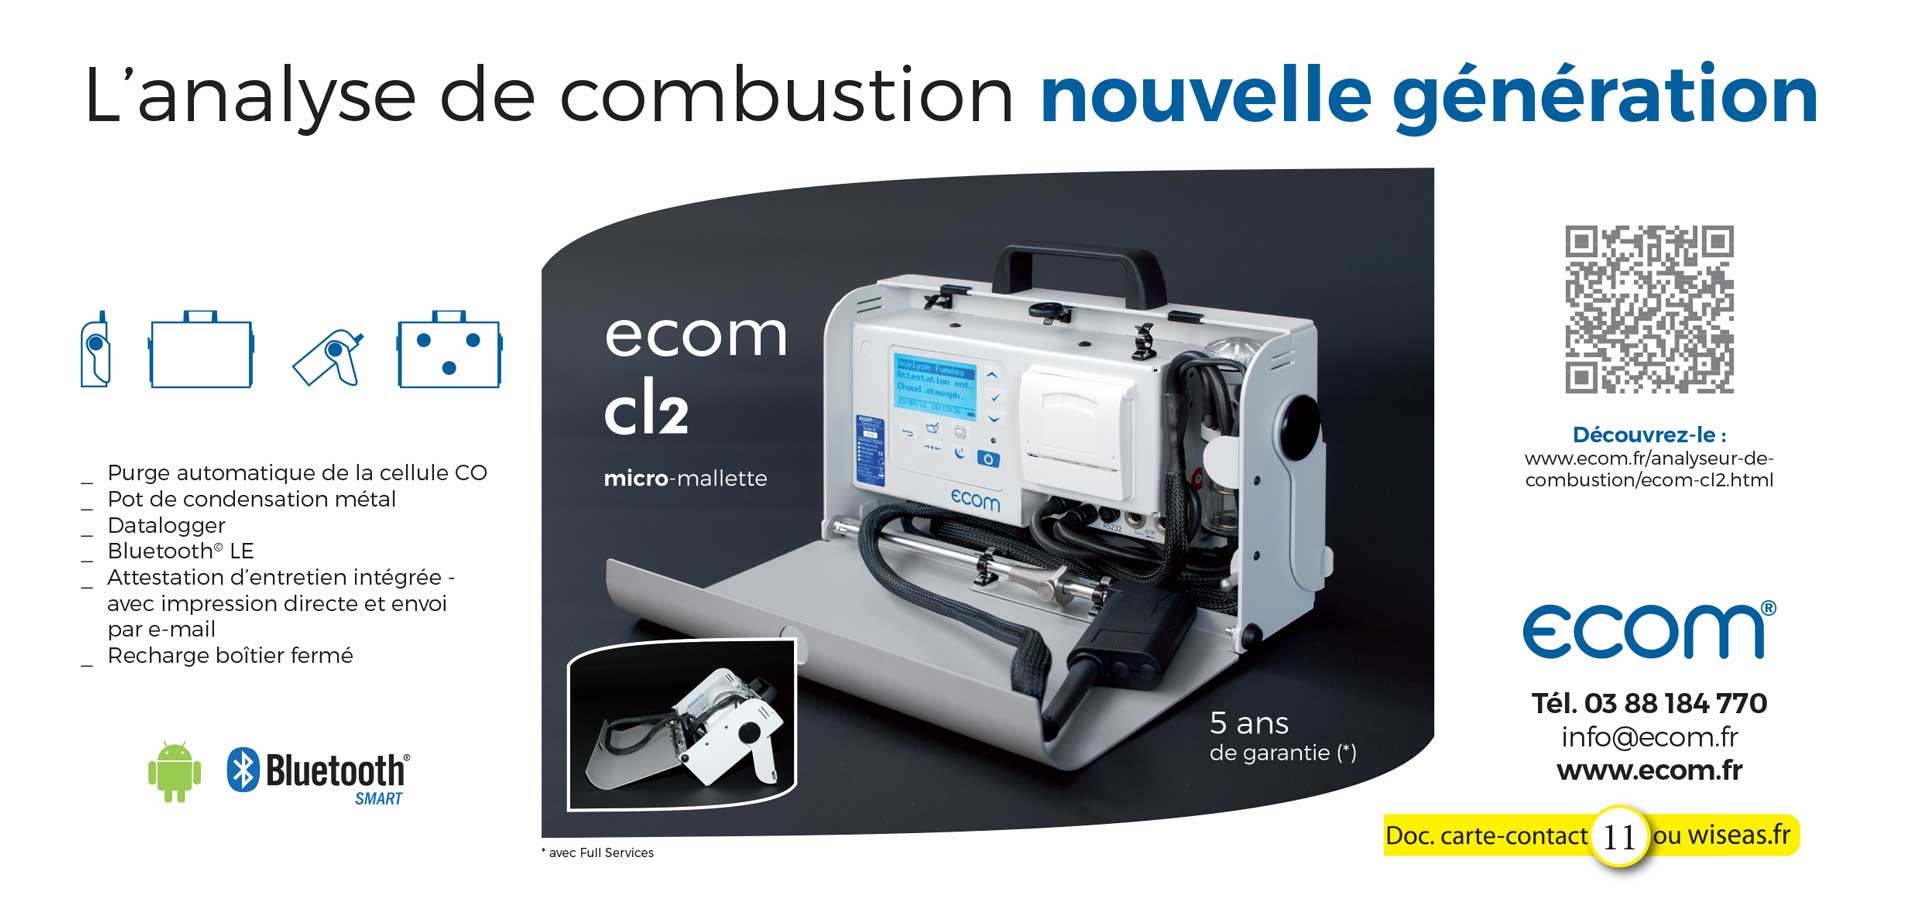 Ecom cl2 micro-malette